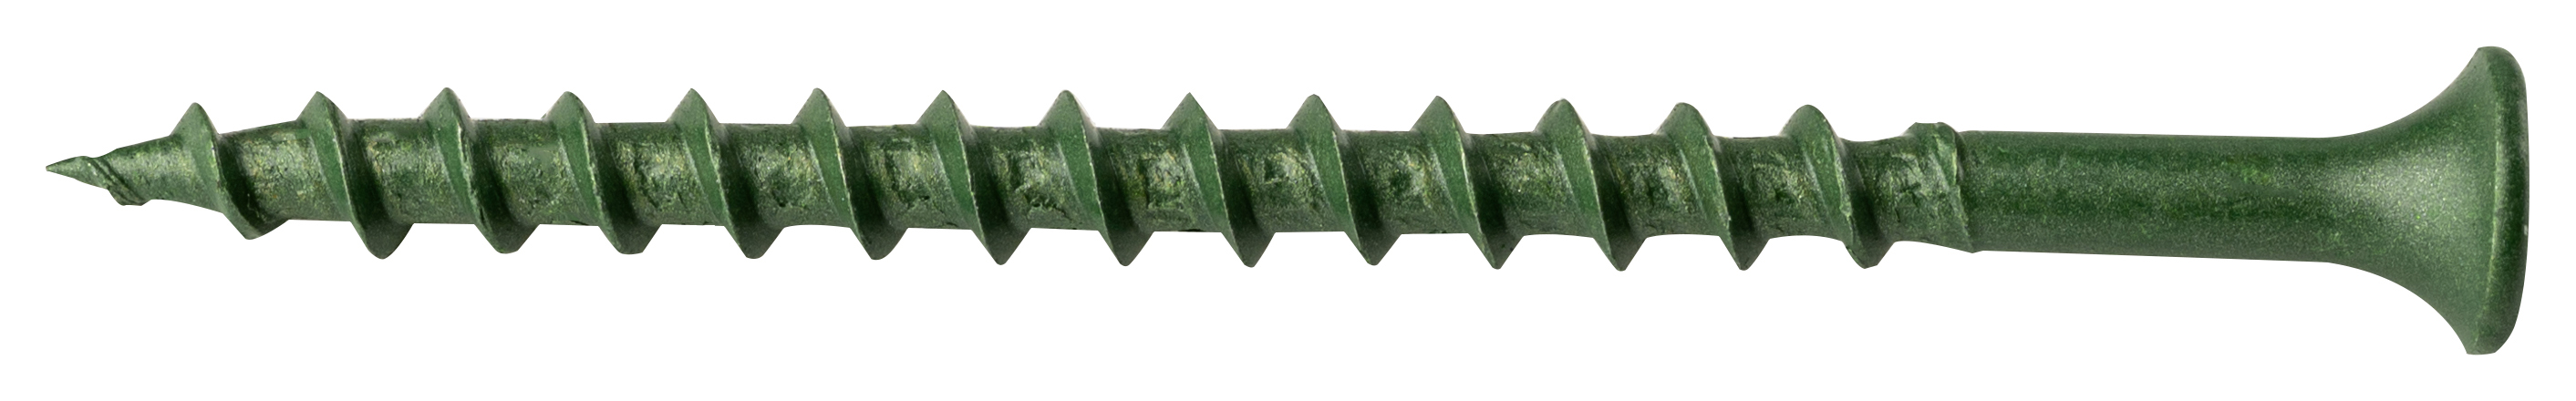 Wickes Exterior Grade Green Screws - 4 x 65mm - Pack of 500